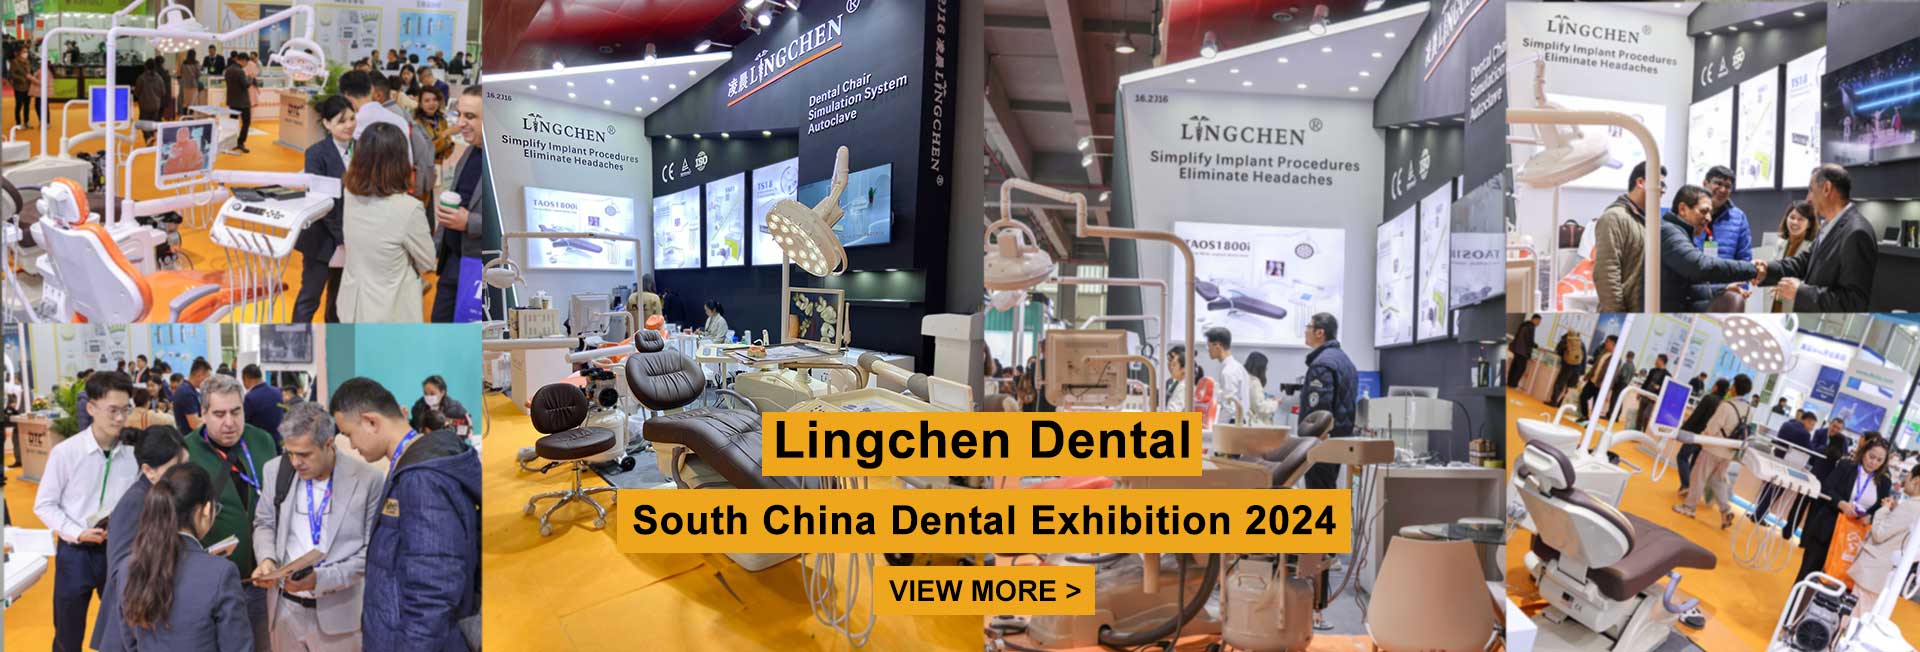 South-China-Dental-Exhibition-2024